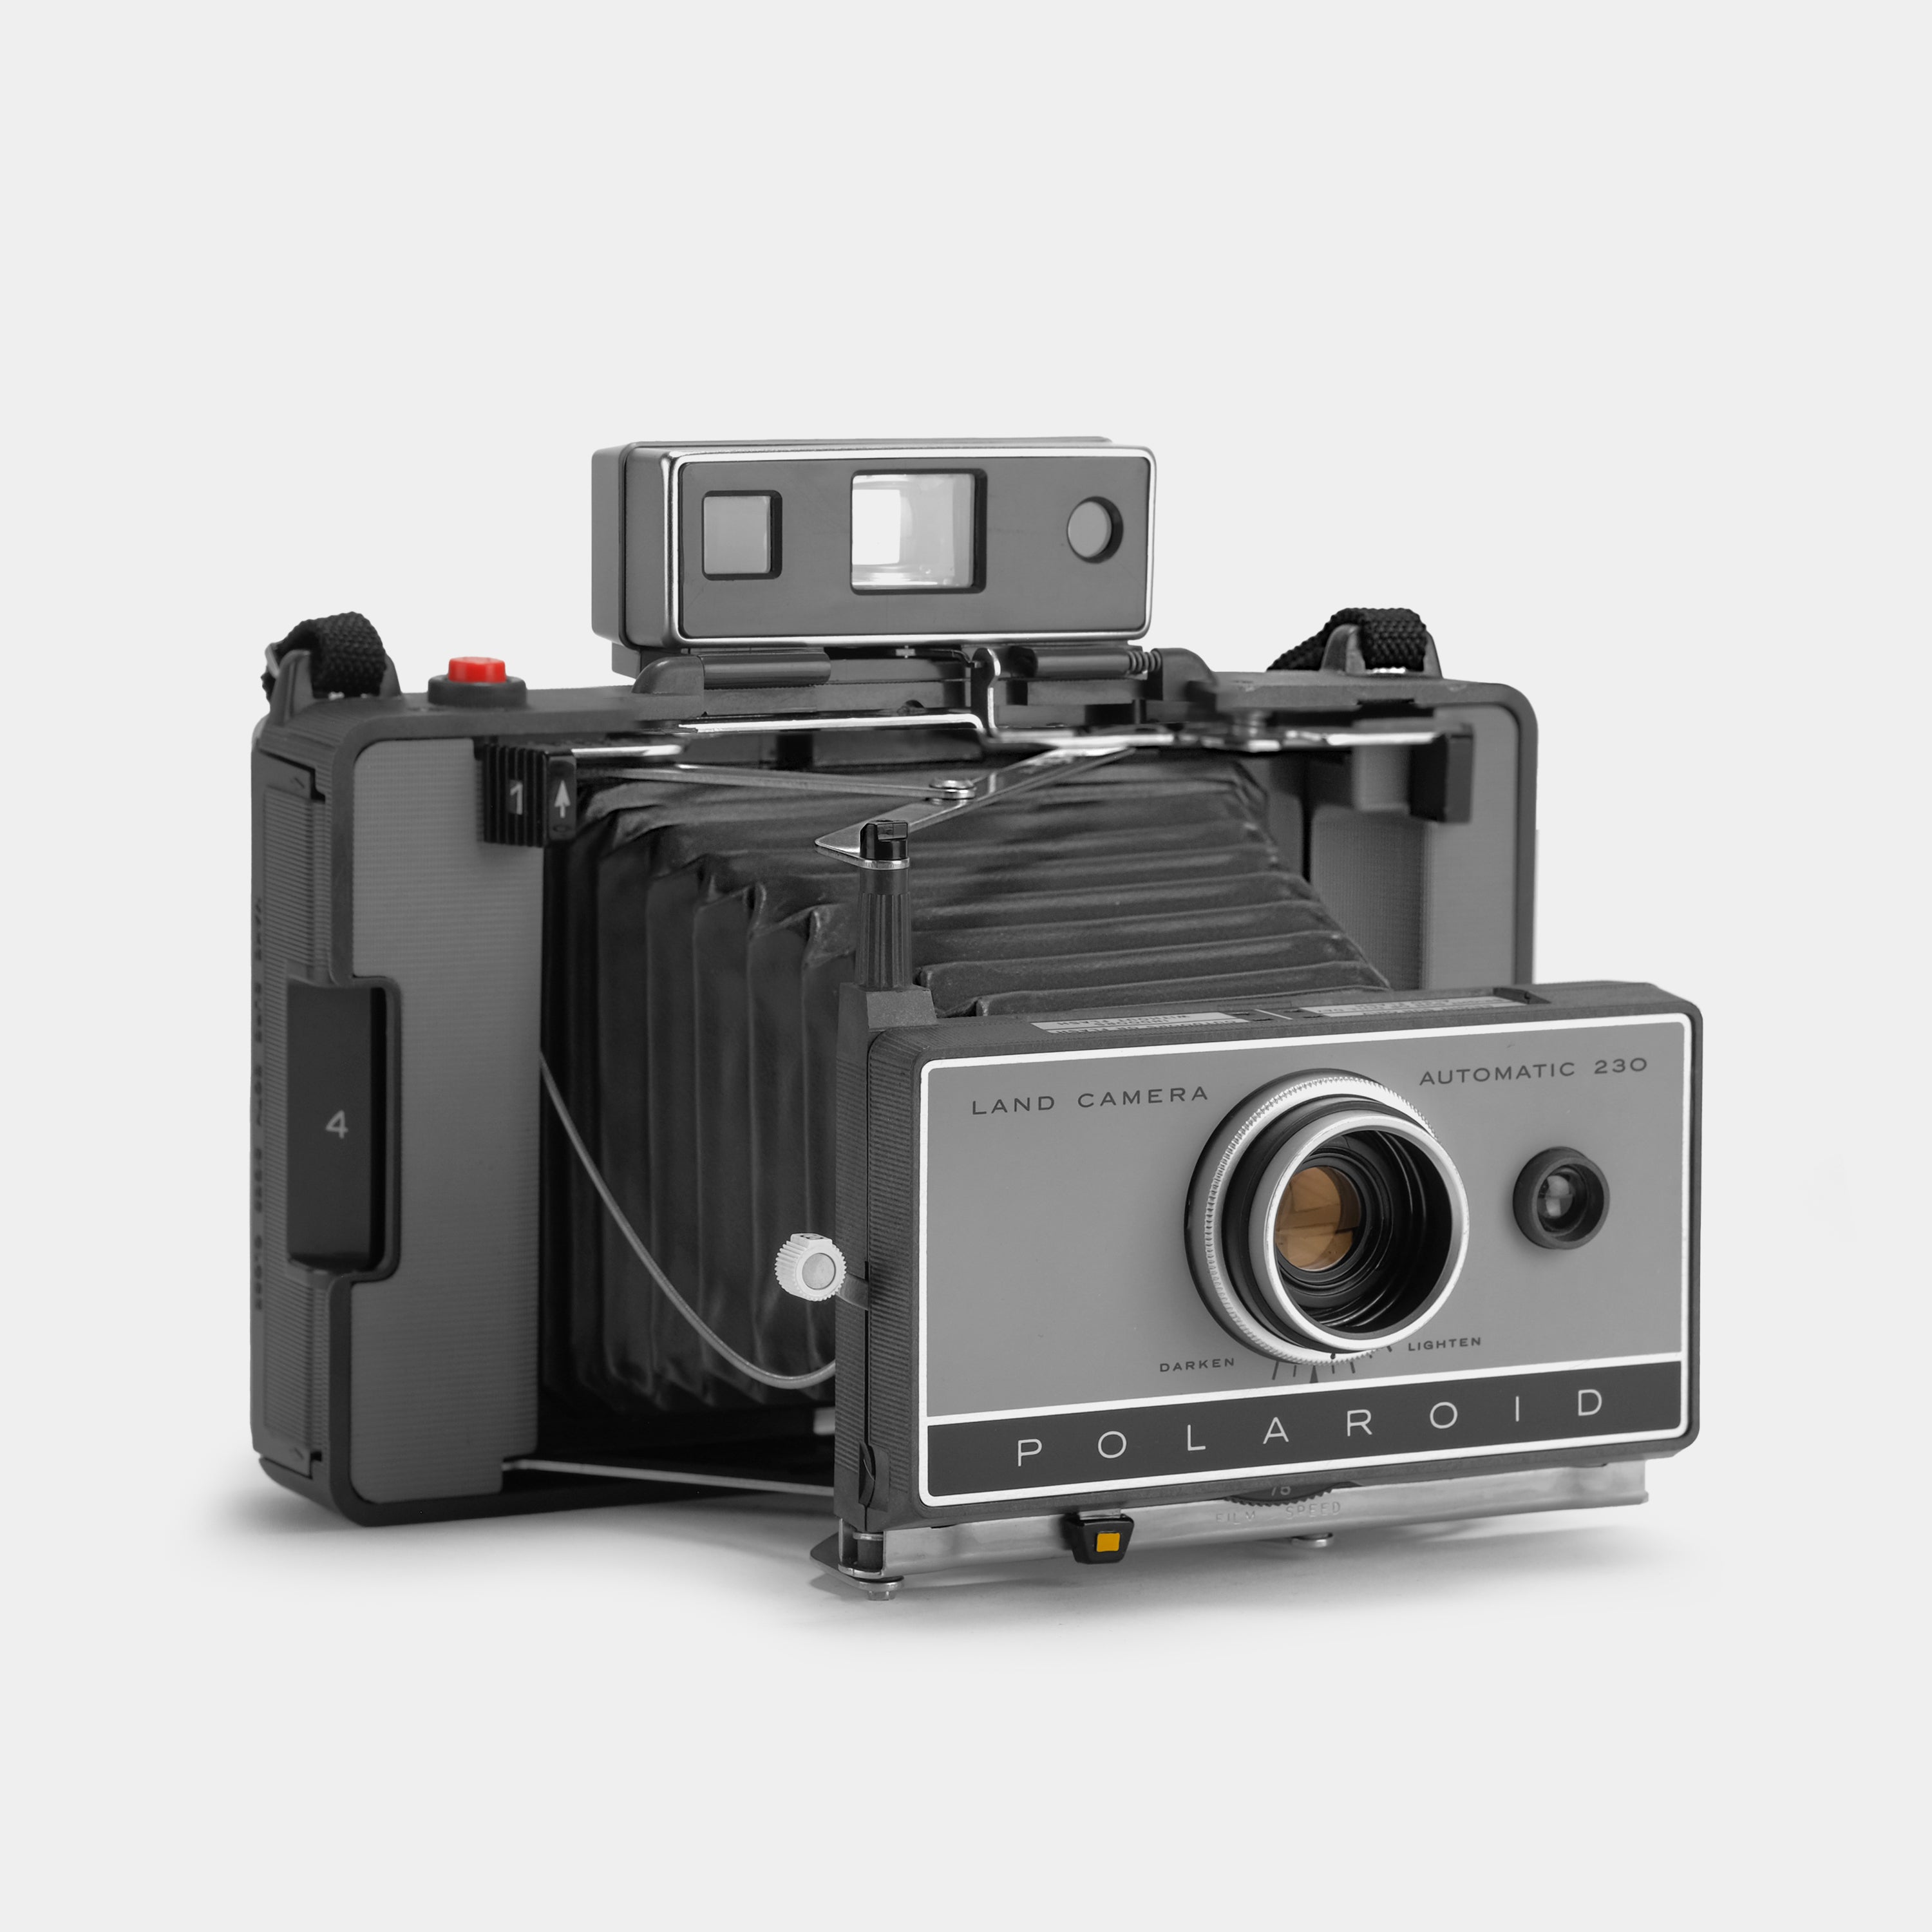 Polaroid Model 230 Packfilm Land Camera